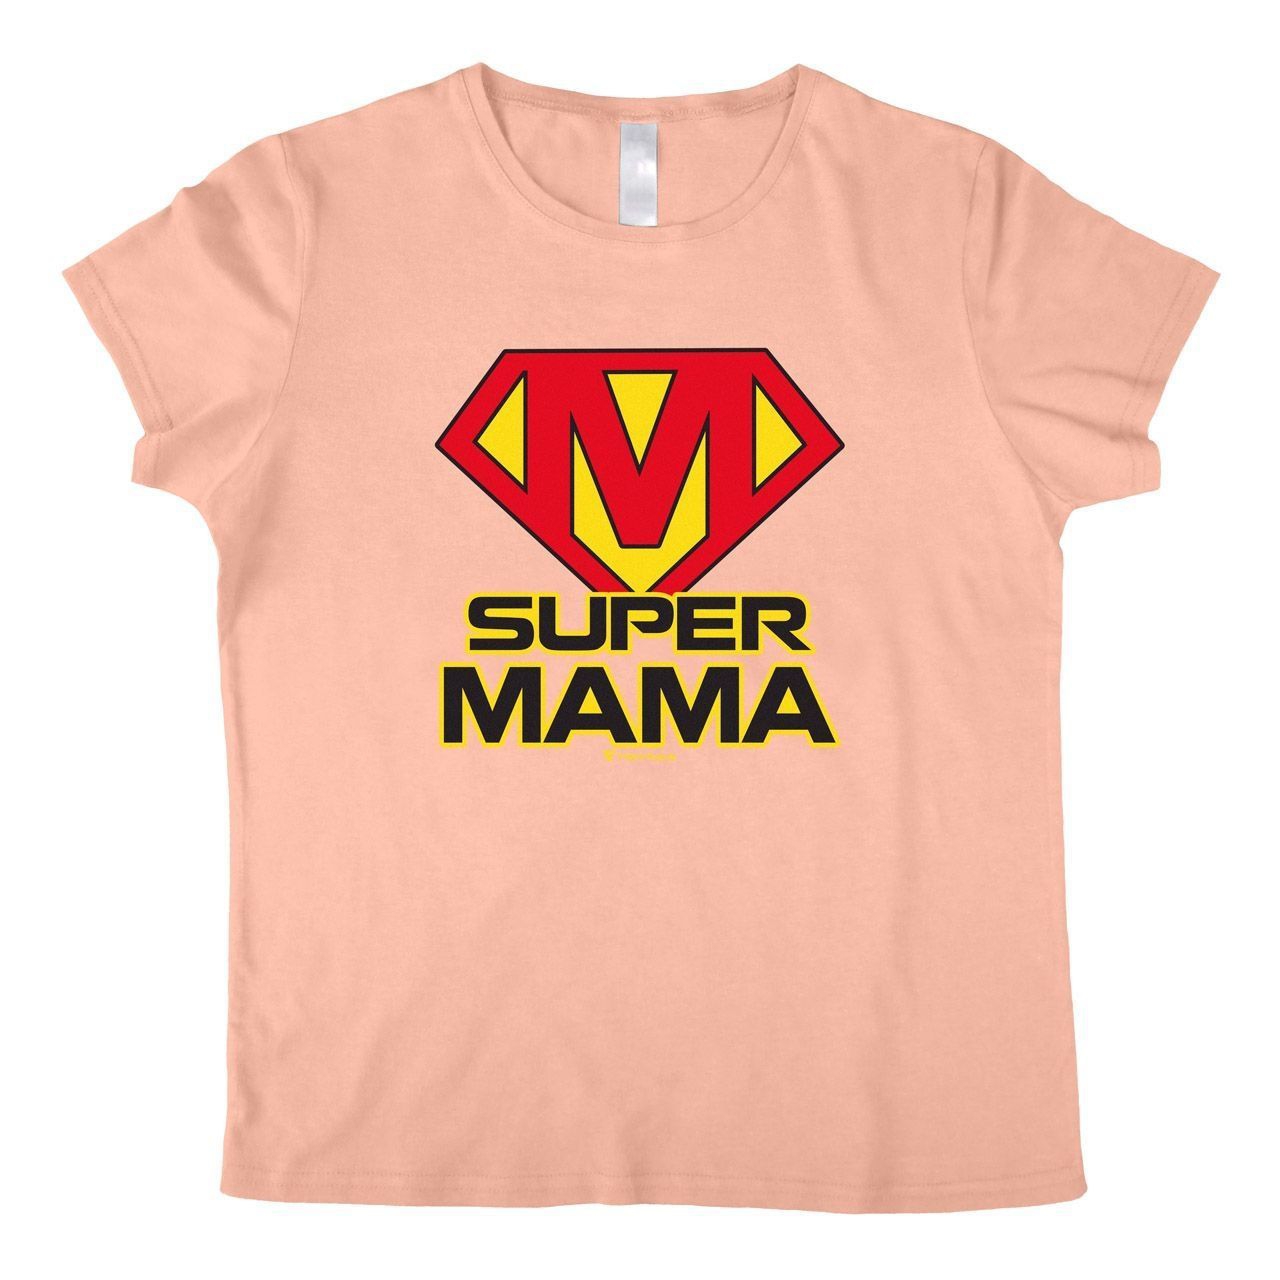 Super Mama Woman T-Shirt rosa 2-Extra Large